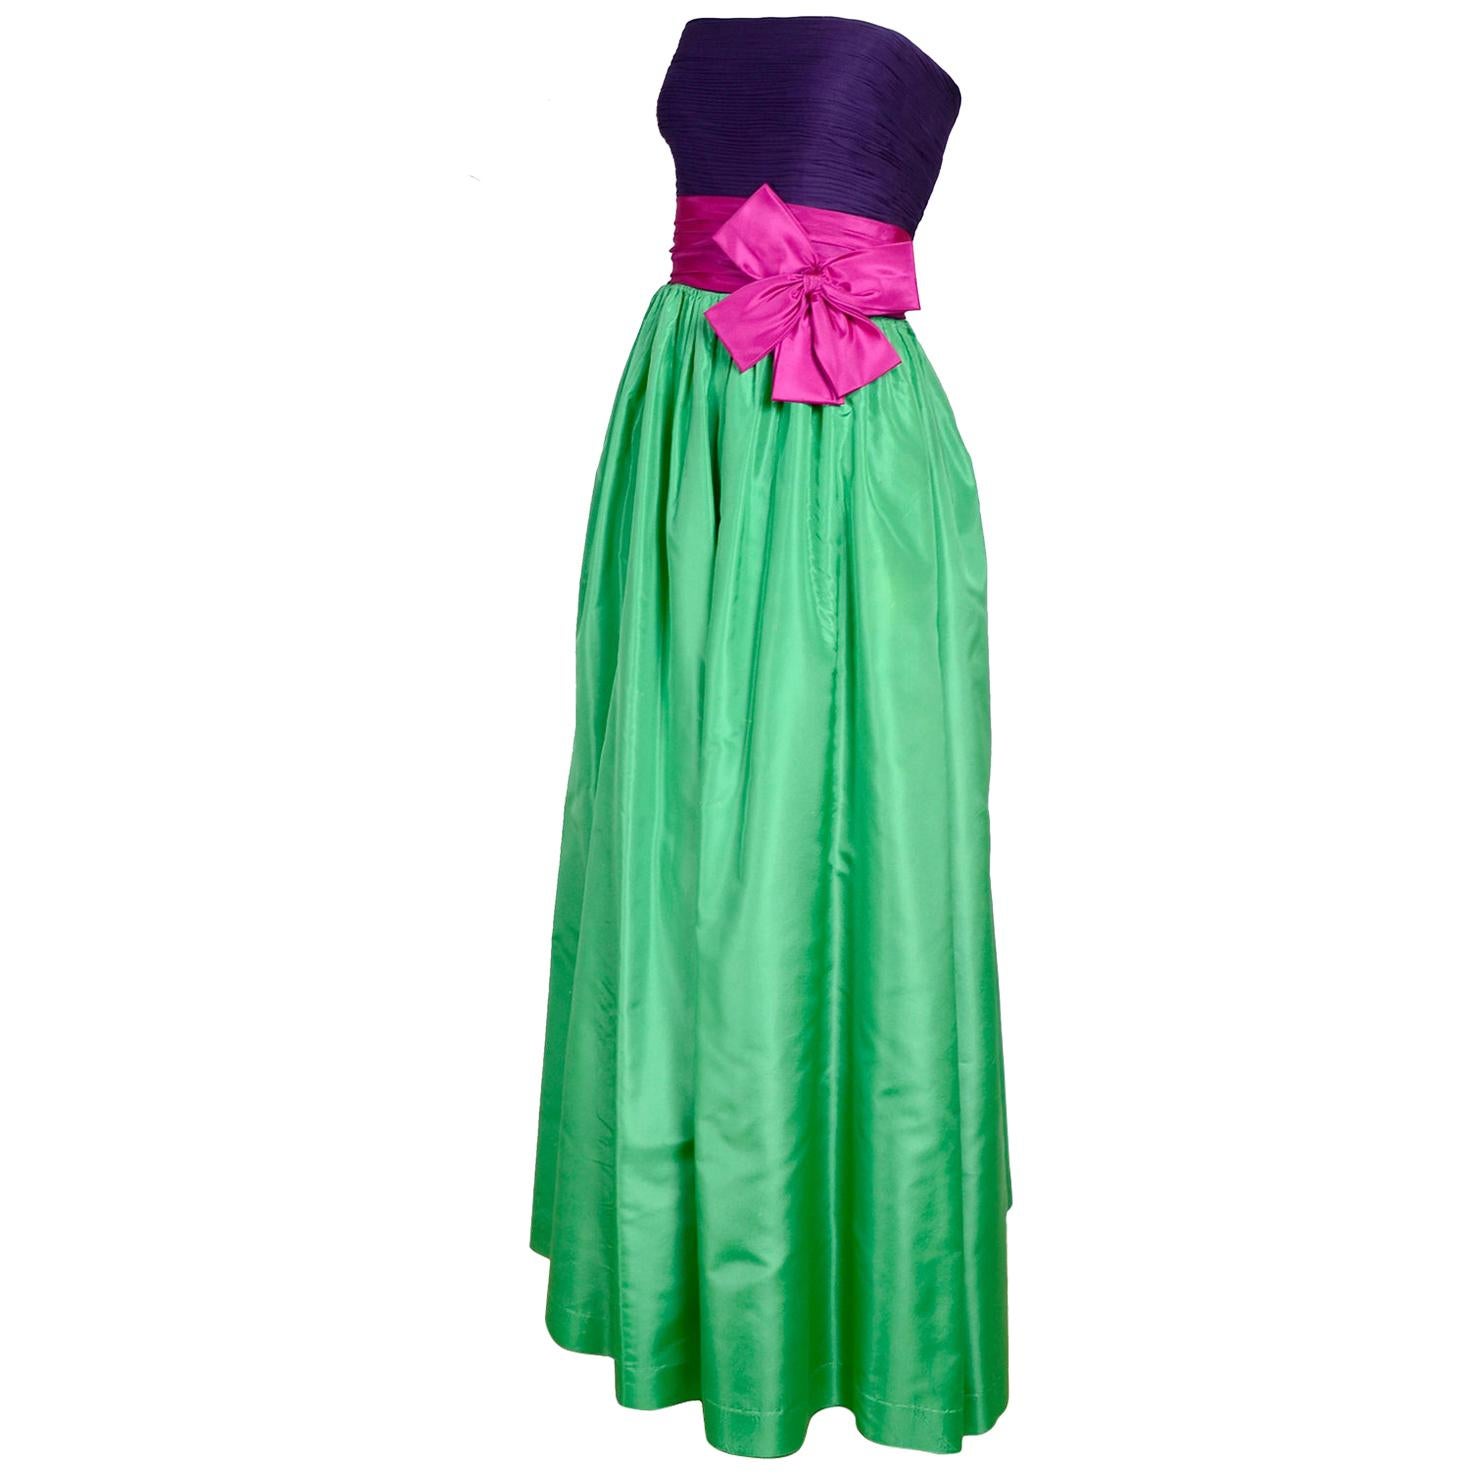 Nina Ricci Strapless Dress Green Taffeta and Purple Silk Evening Gown w Pink Bow